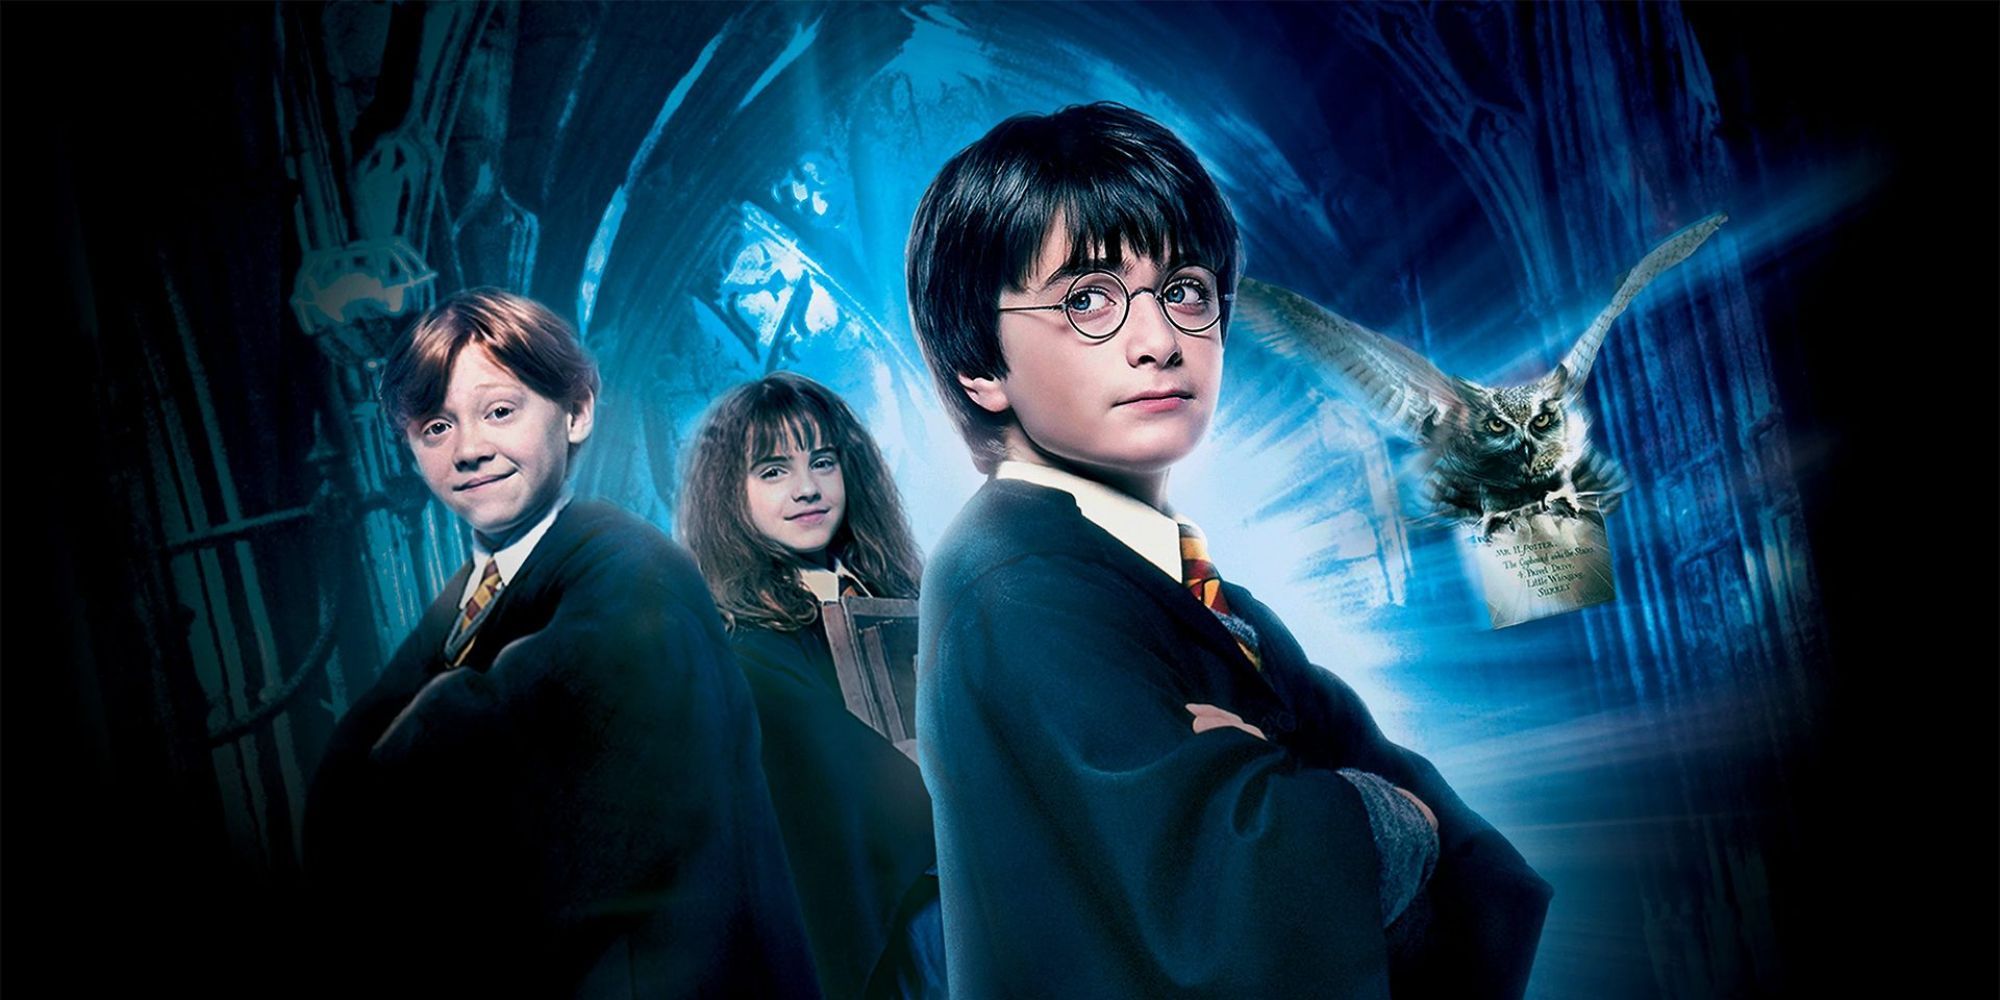 Harry Potter (1)